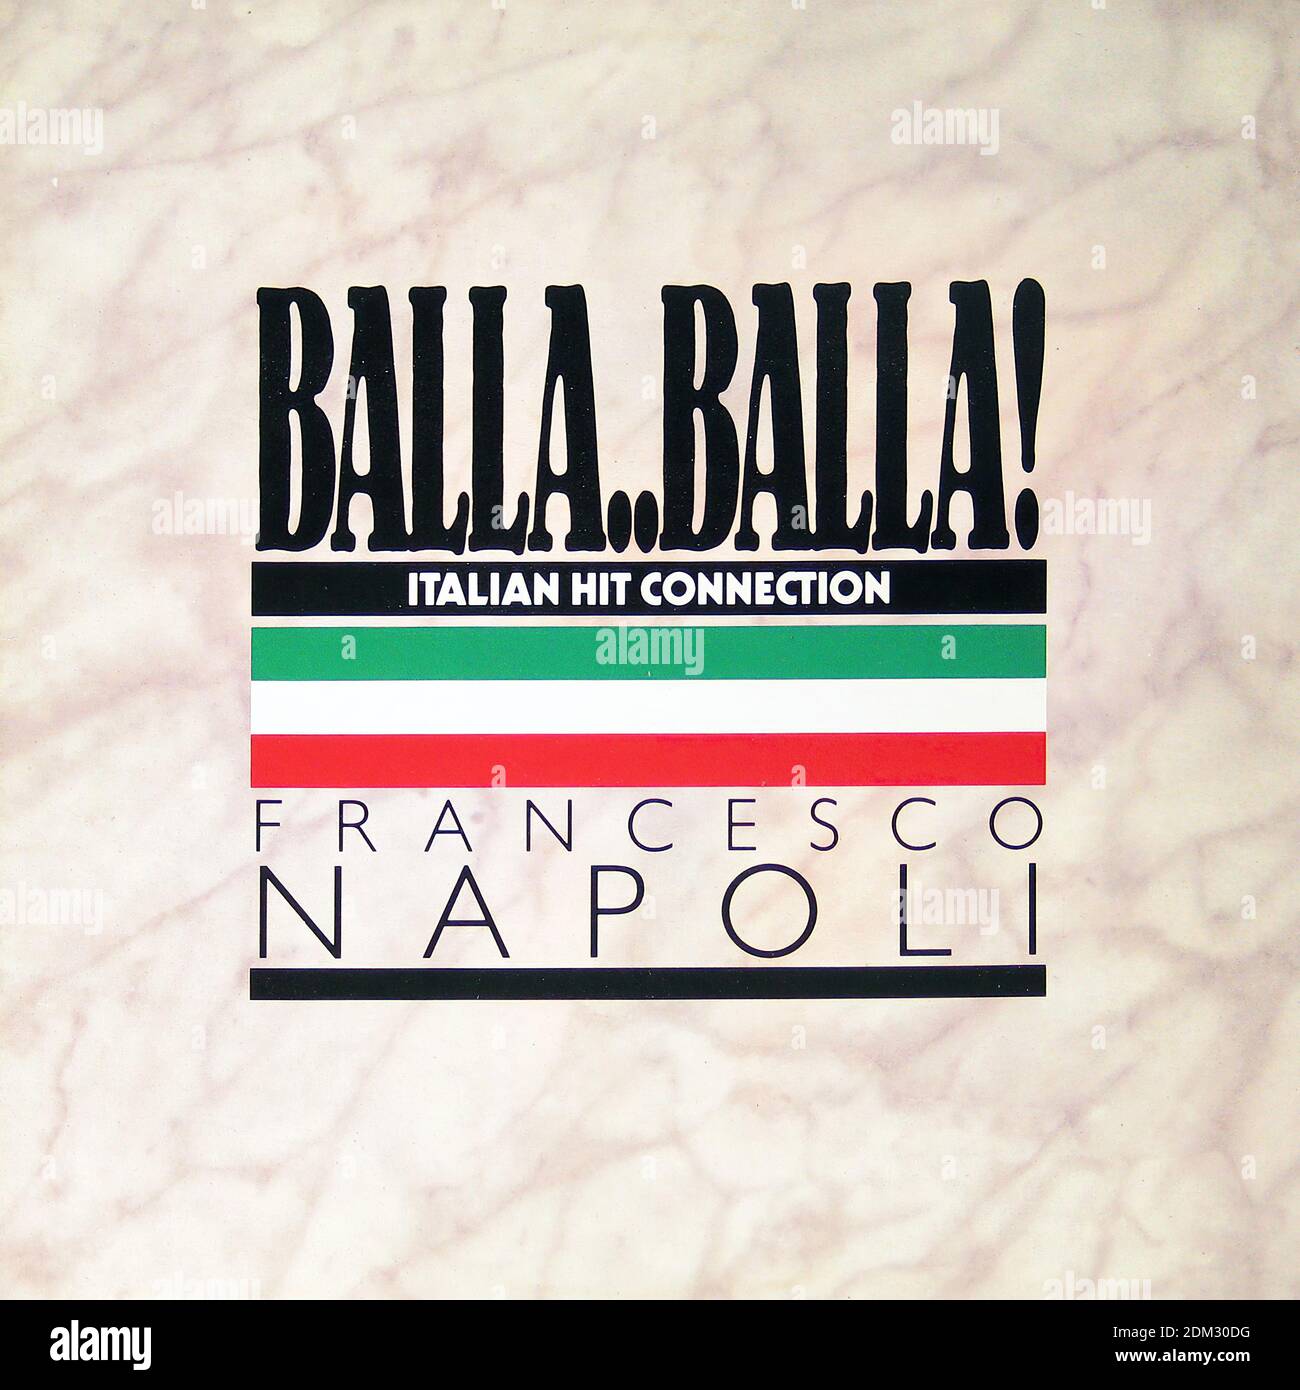 Francesco Napoli Balla Balla Italian Hit Connection Swiss Pressing -  Vintage Vinyl Record Cover Stock Photo - Alamy